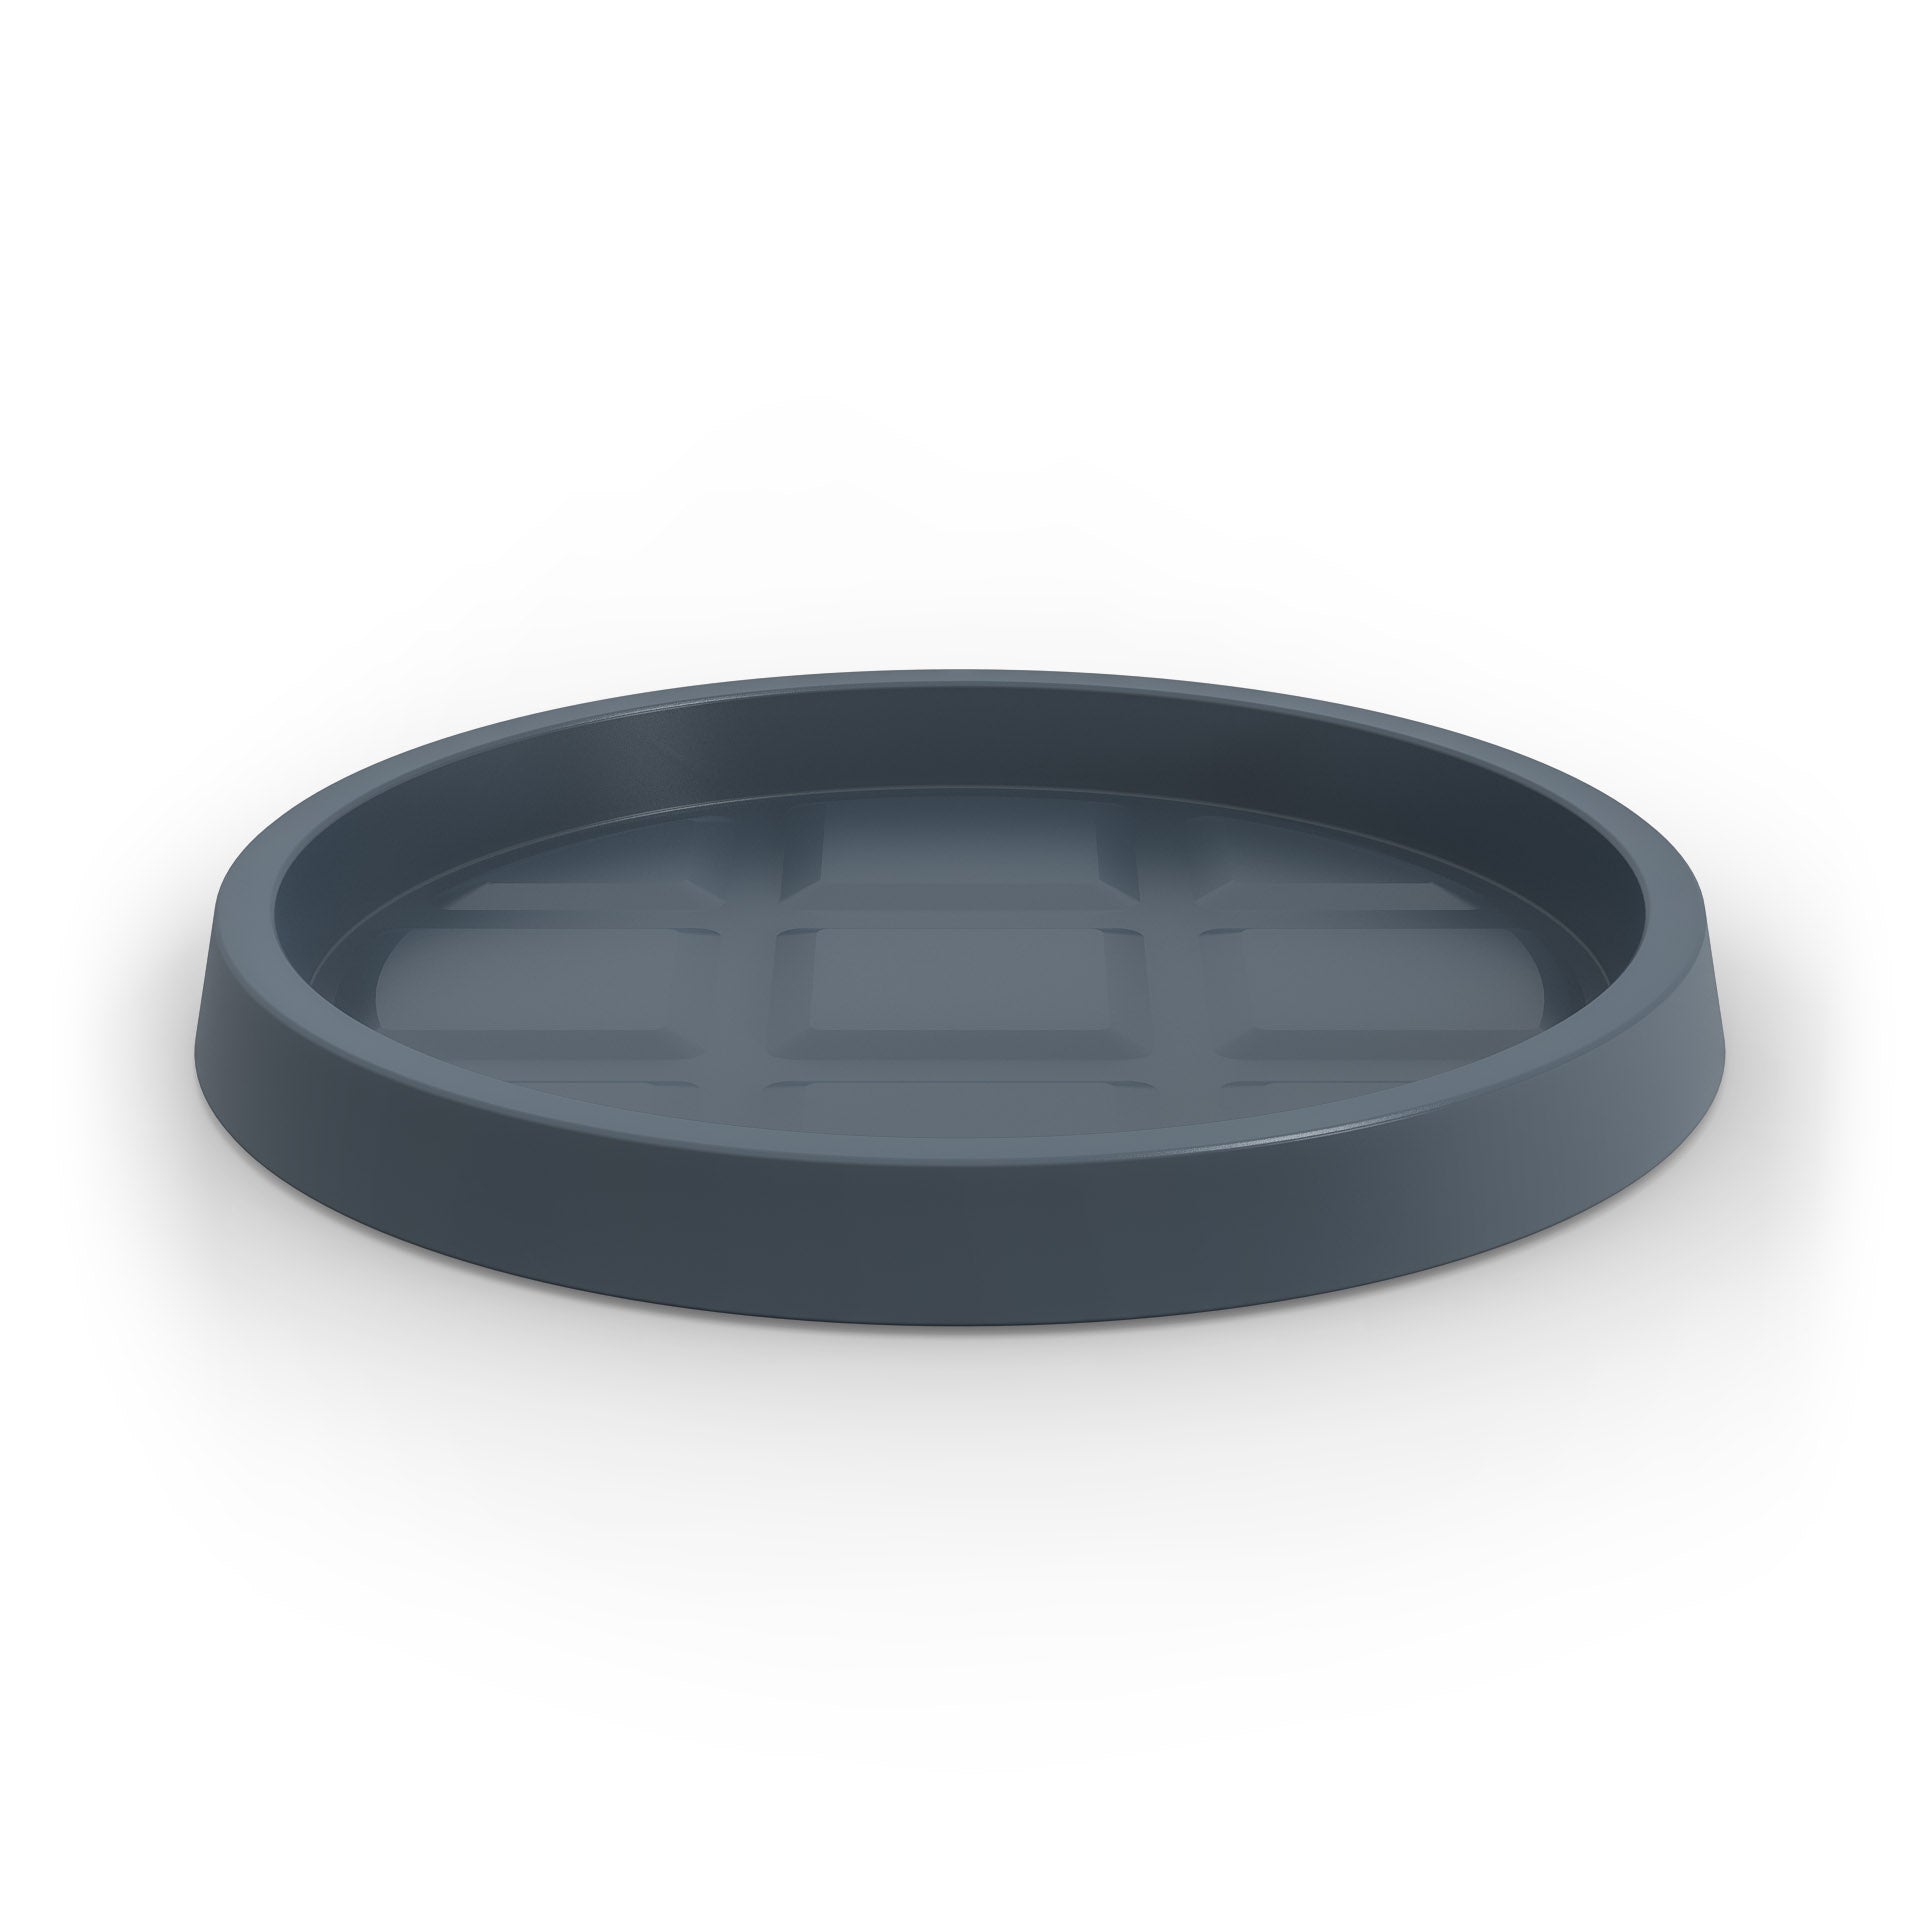 A dark grey saucer for Modscene planters. NZ made.